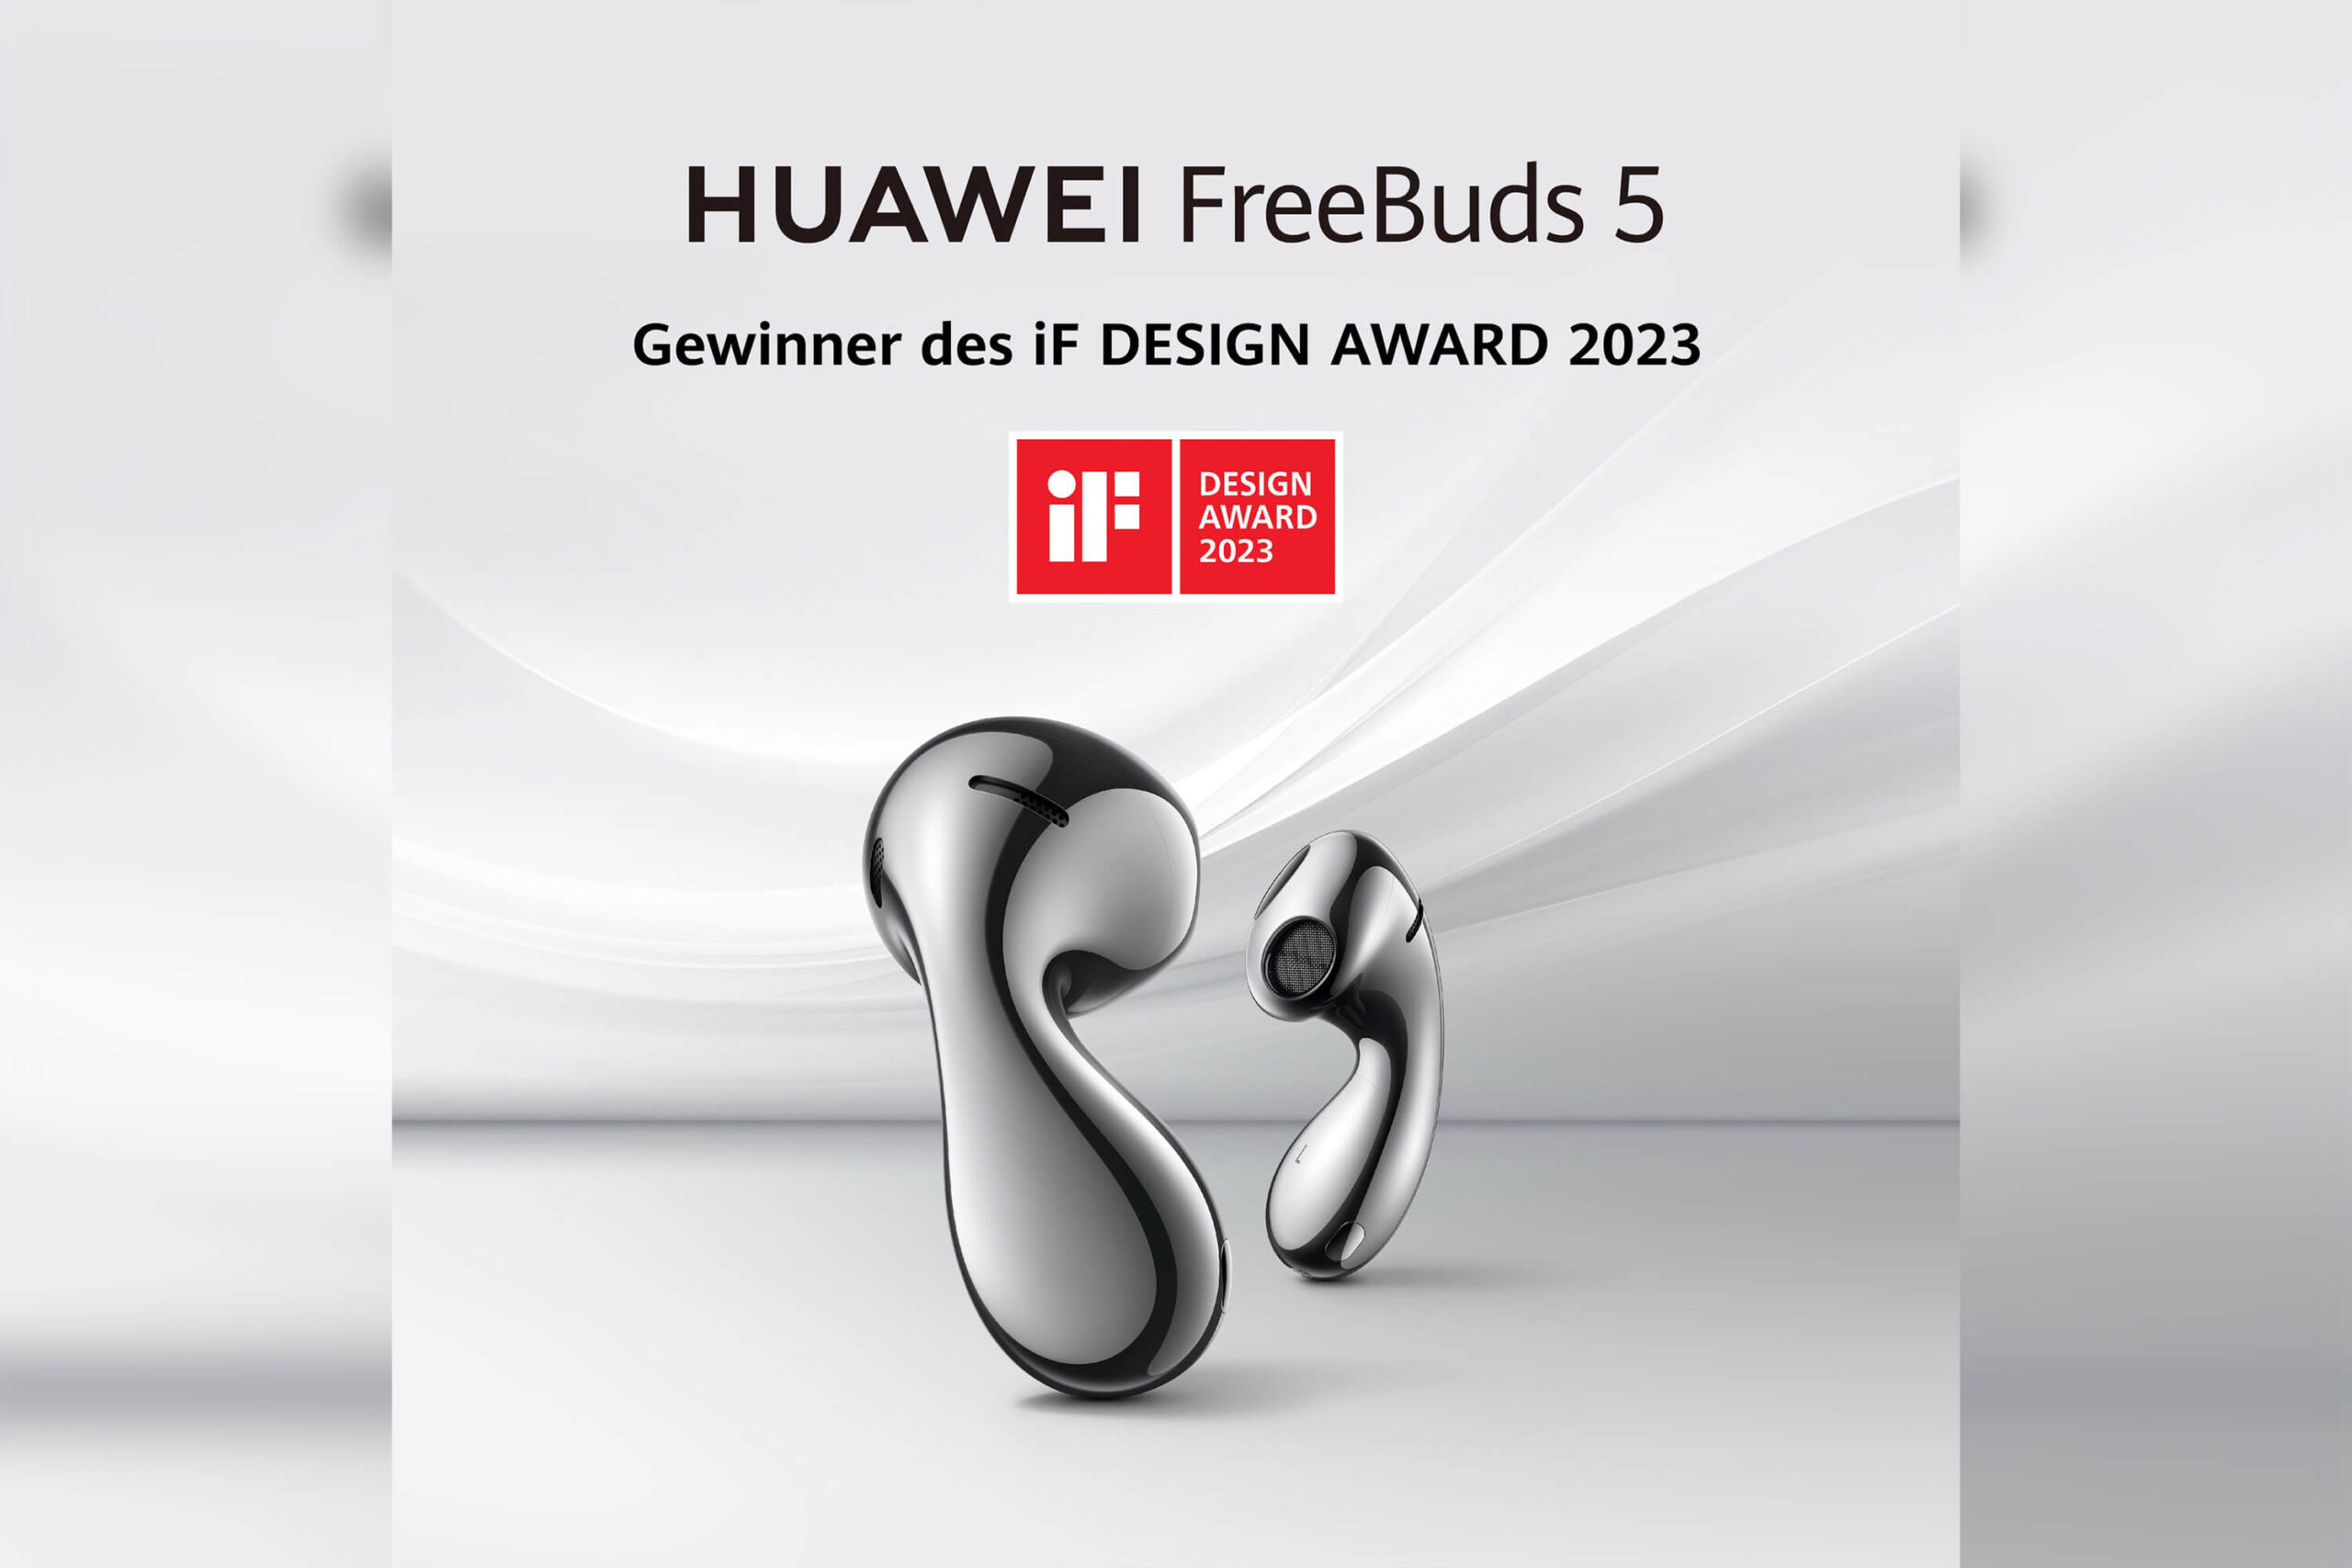 「HUAWEI FreeBuds 5」はiFデザイン賞2023を受賞